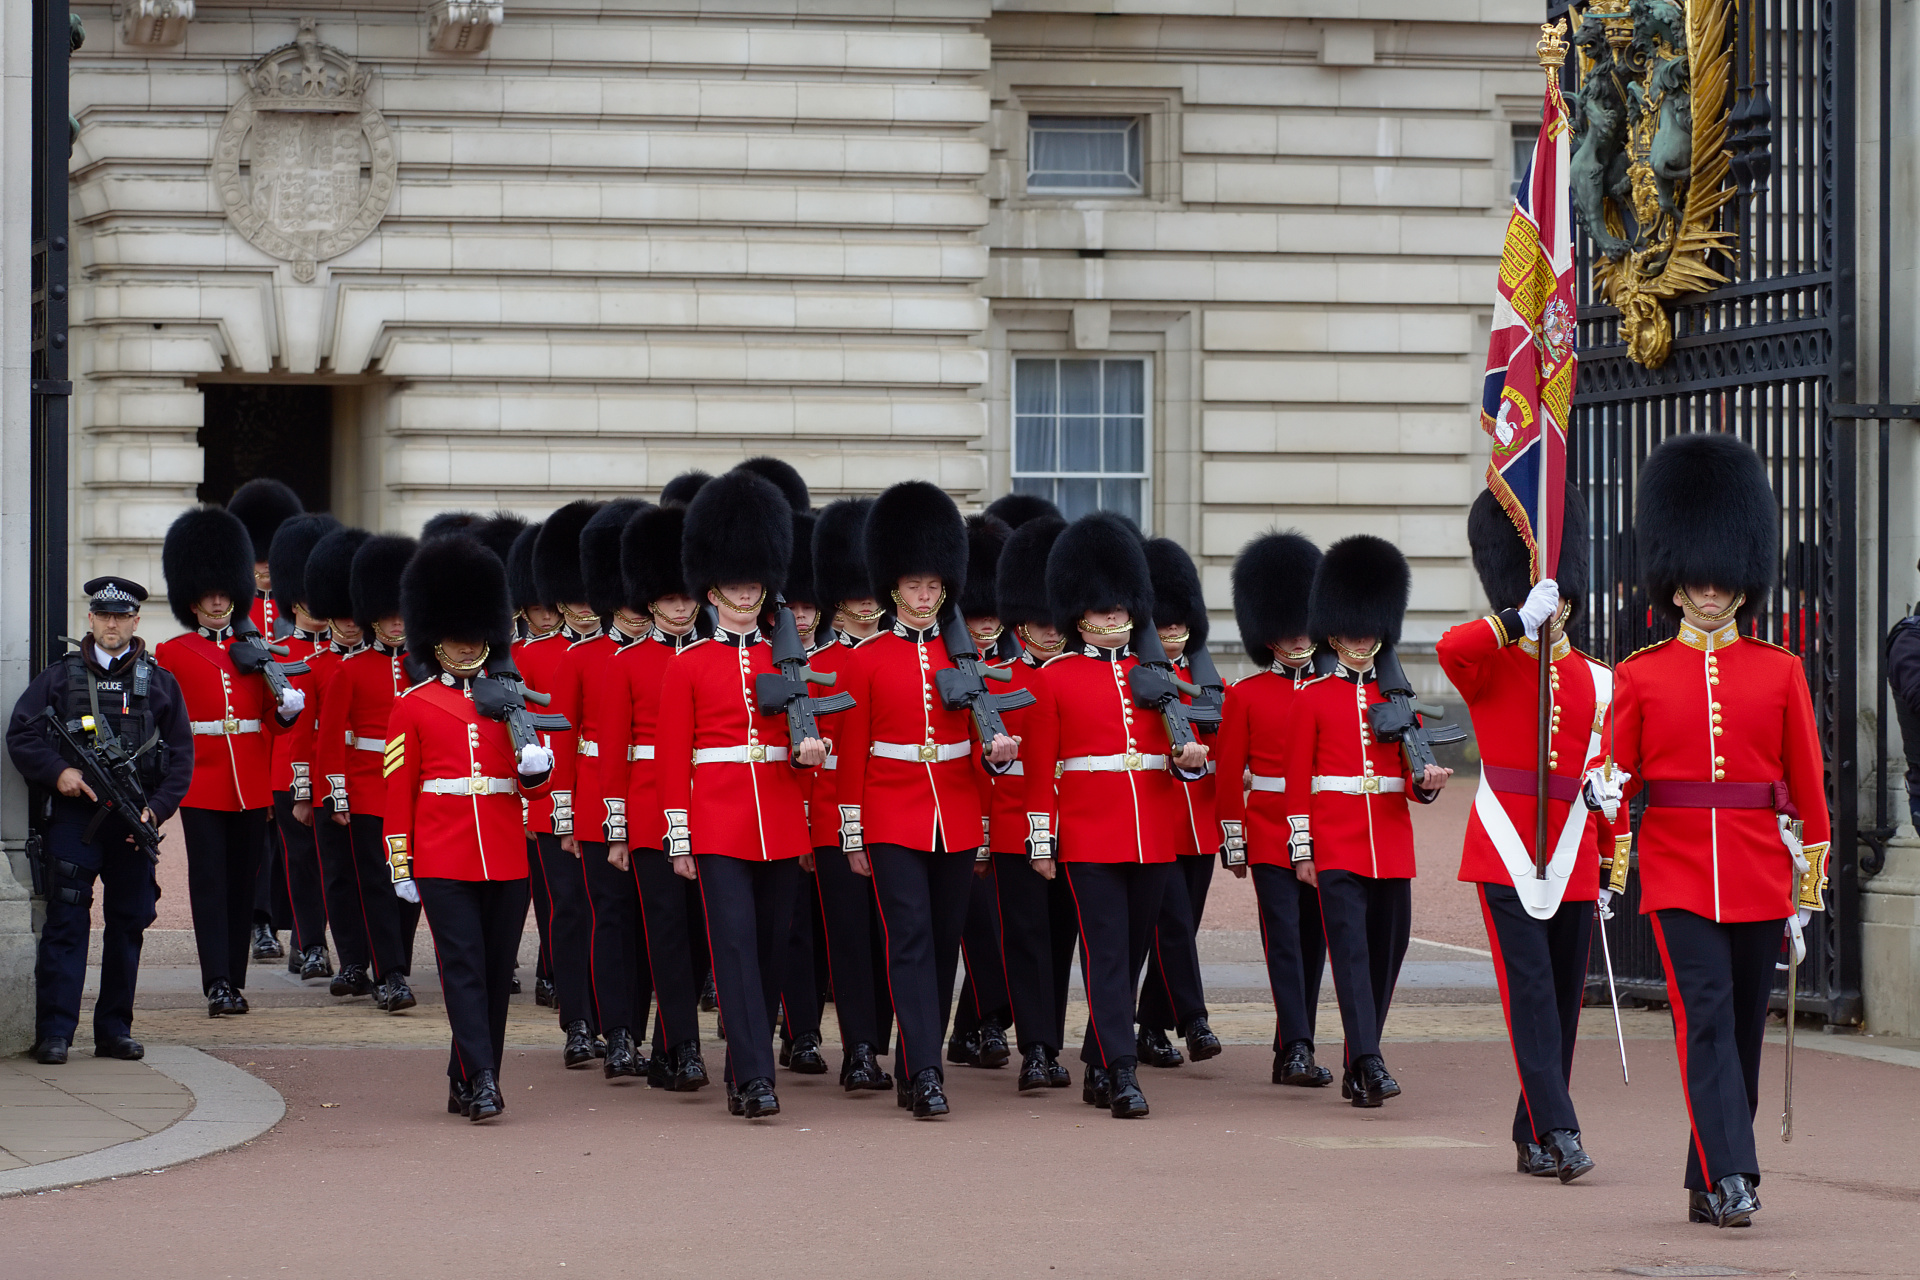 IMG_5104 (Travels » London » Changing the Guard at Buckingham Palace)